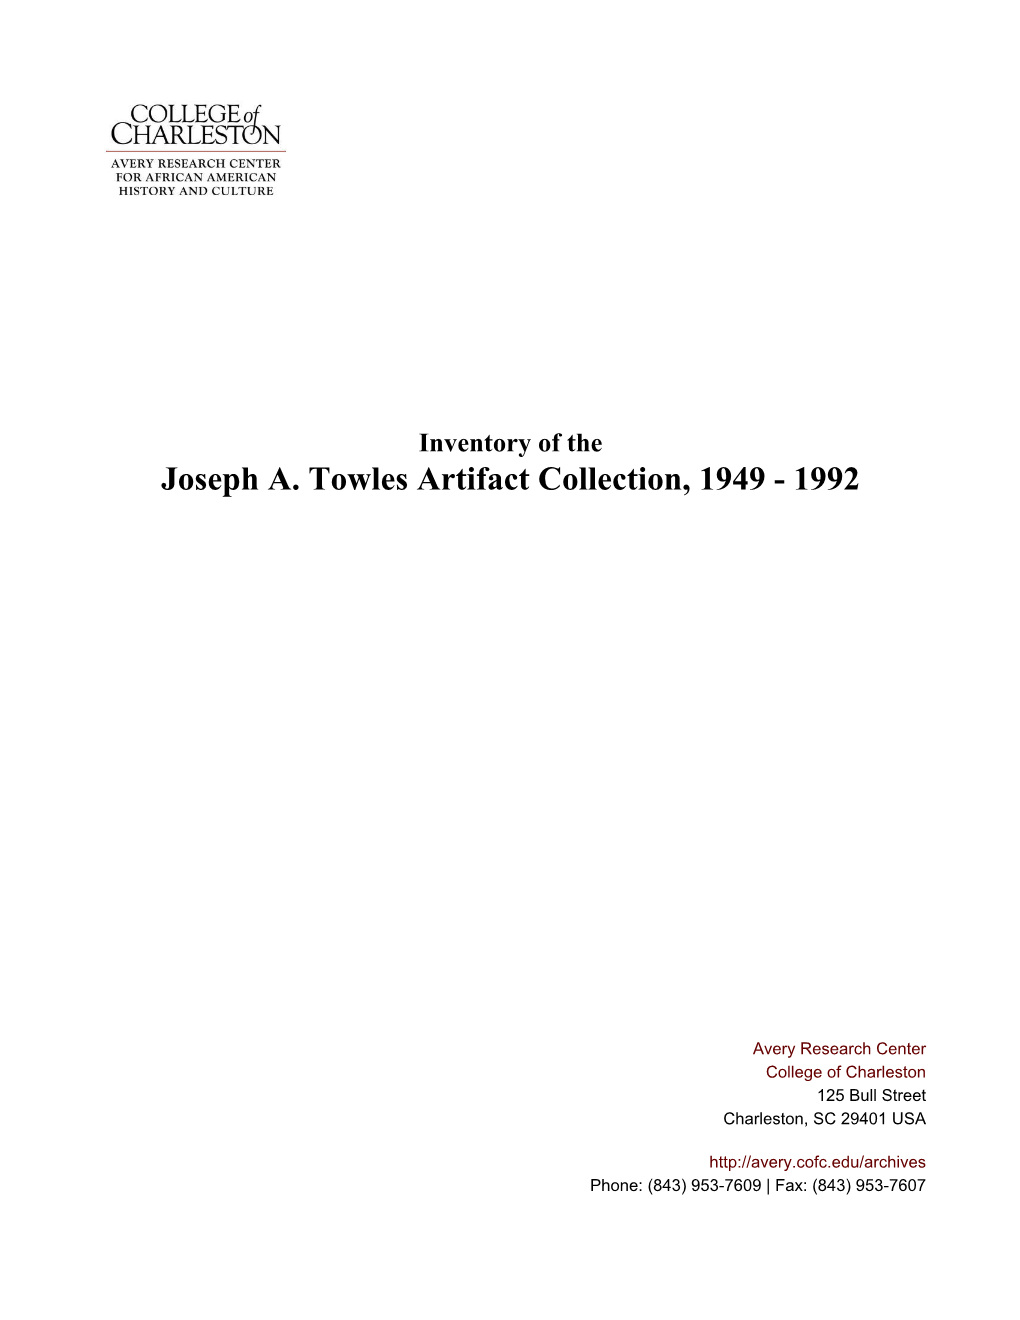 Joseph A. Towles Artifact Collection, 1949 - 1992